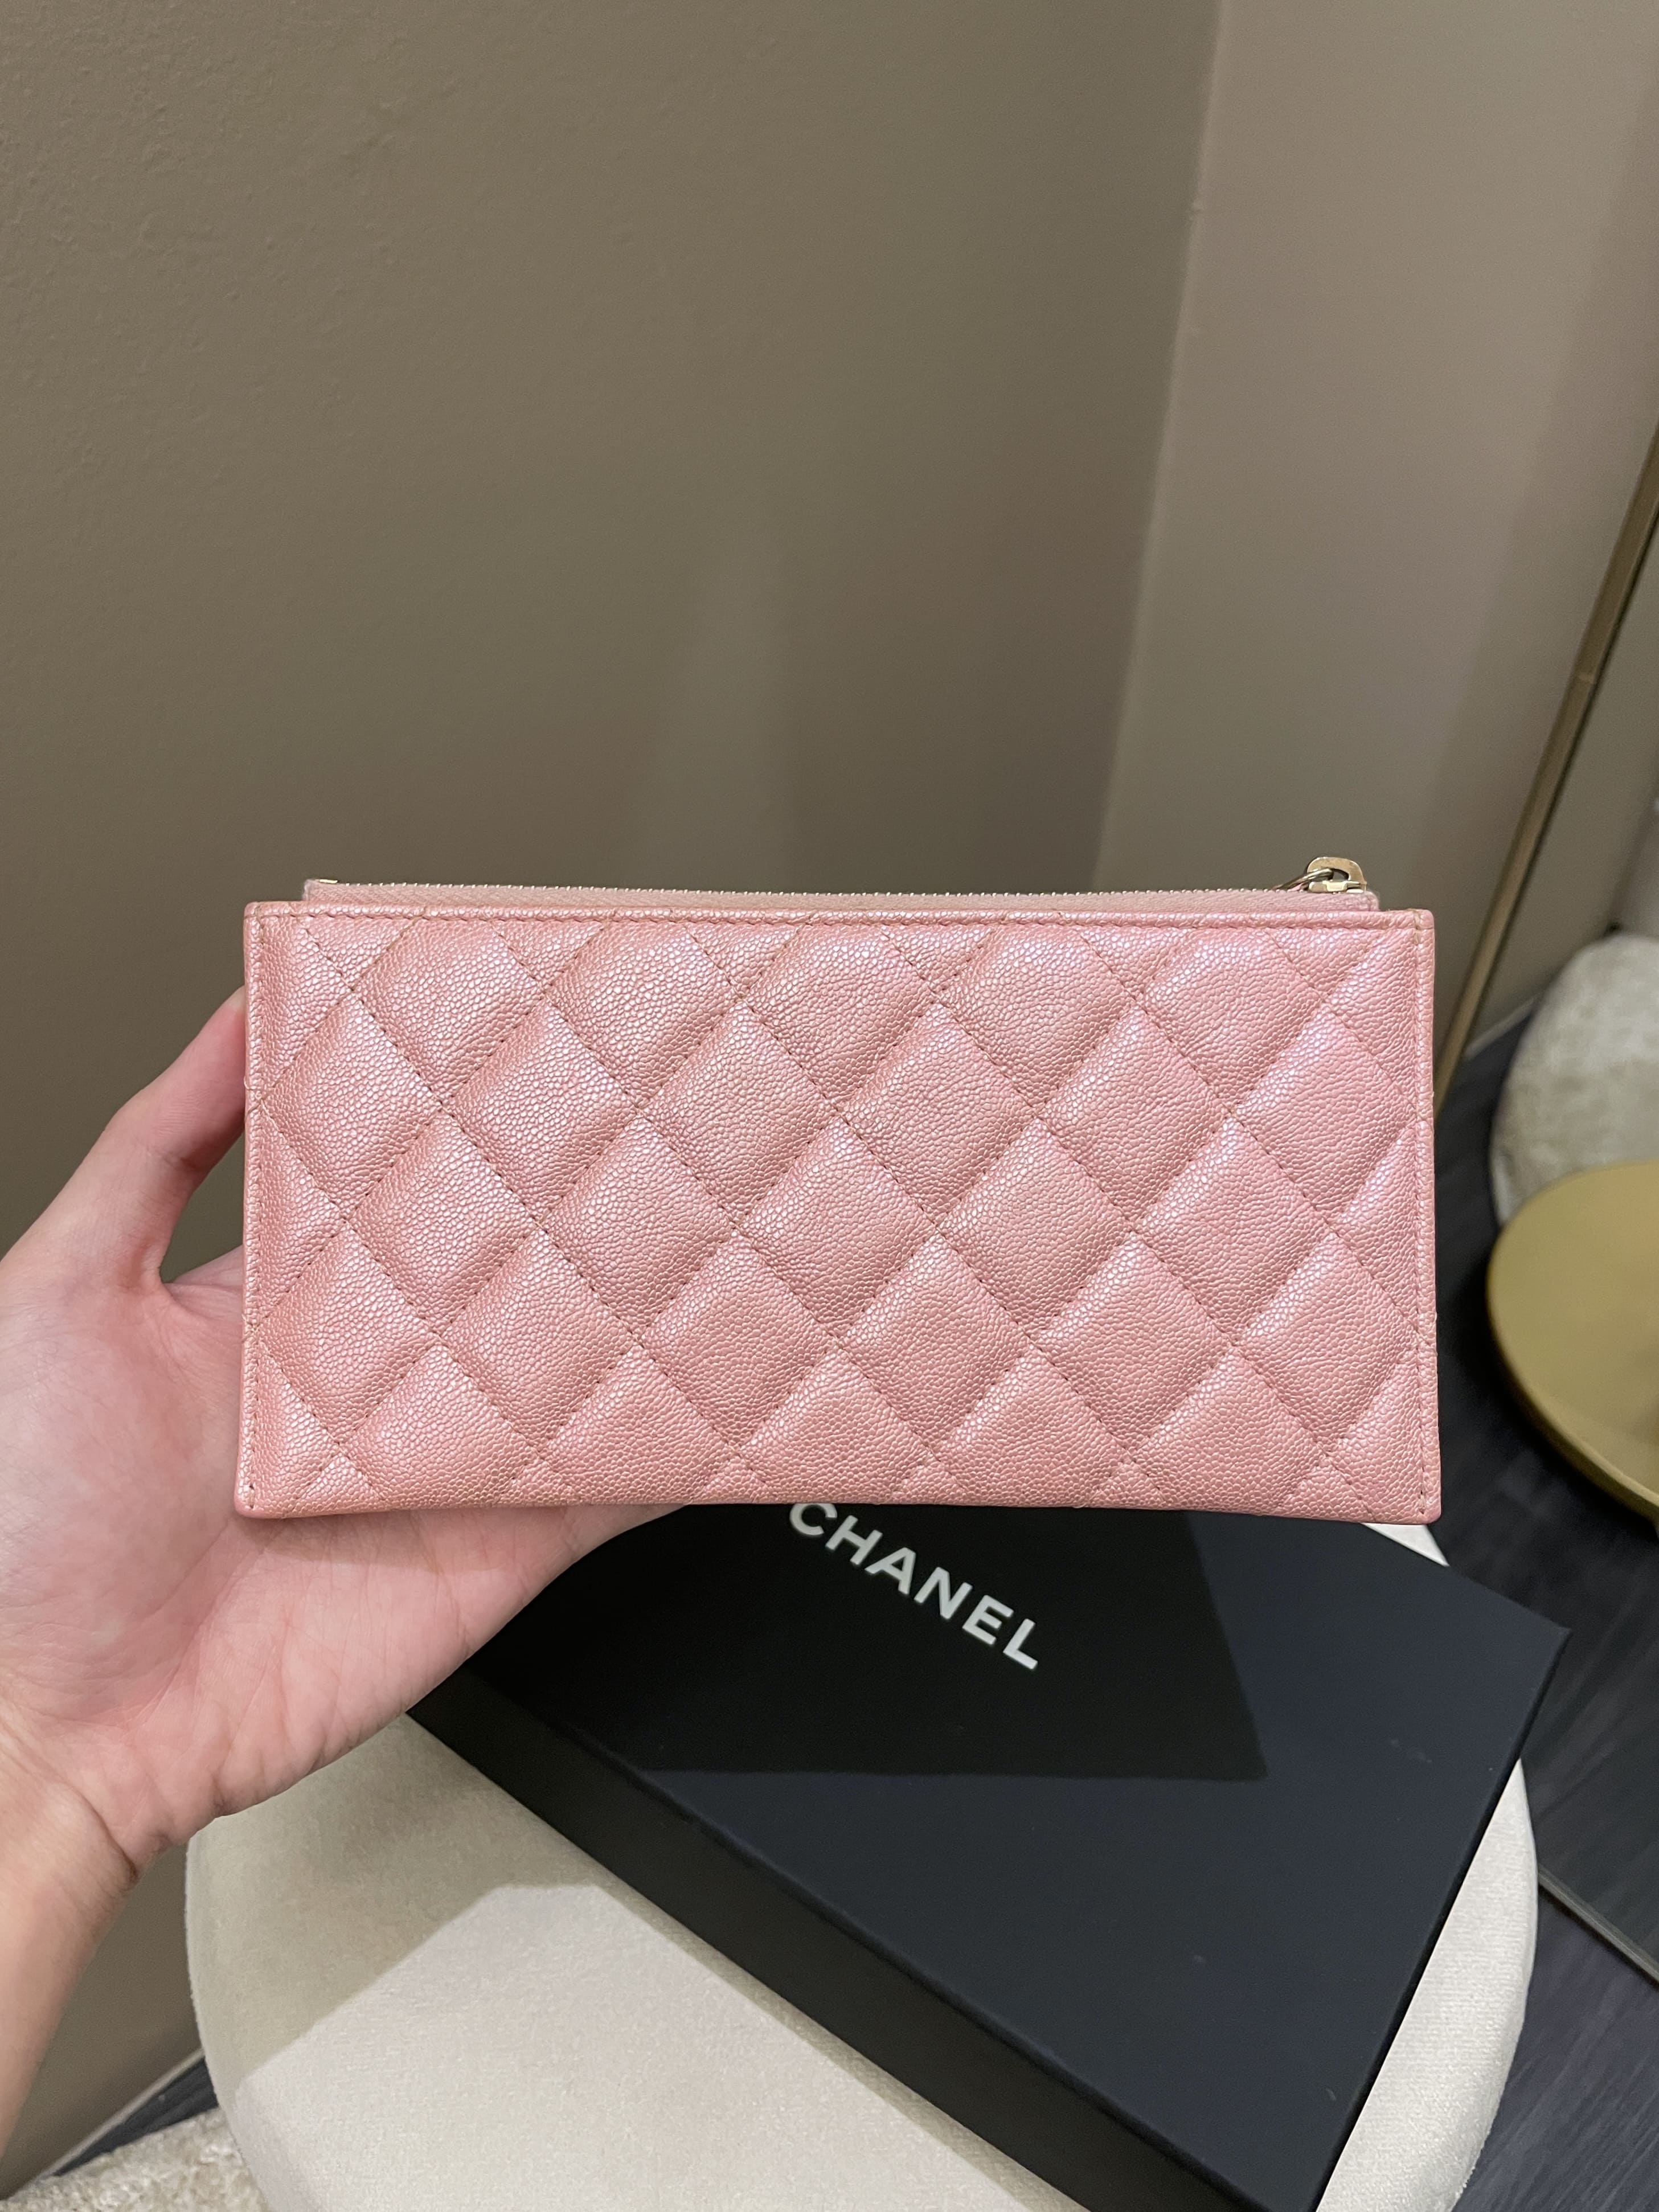 Chanel Iridescent Caviar Quilted Pink Passport Cover - LVLENKA